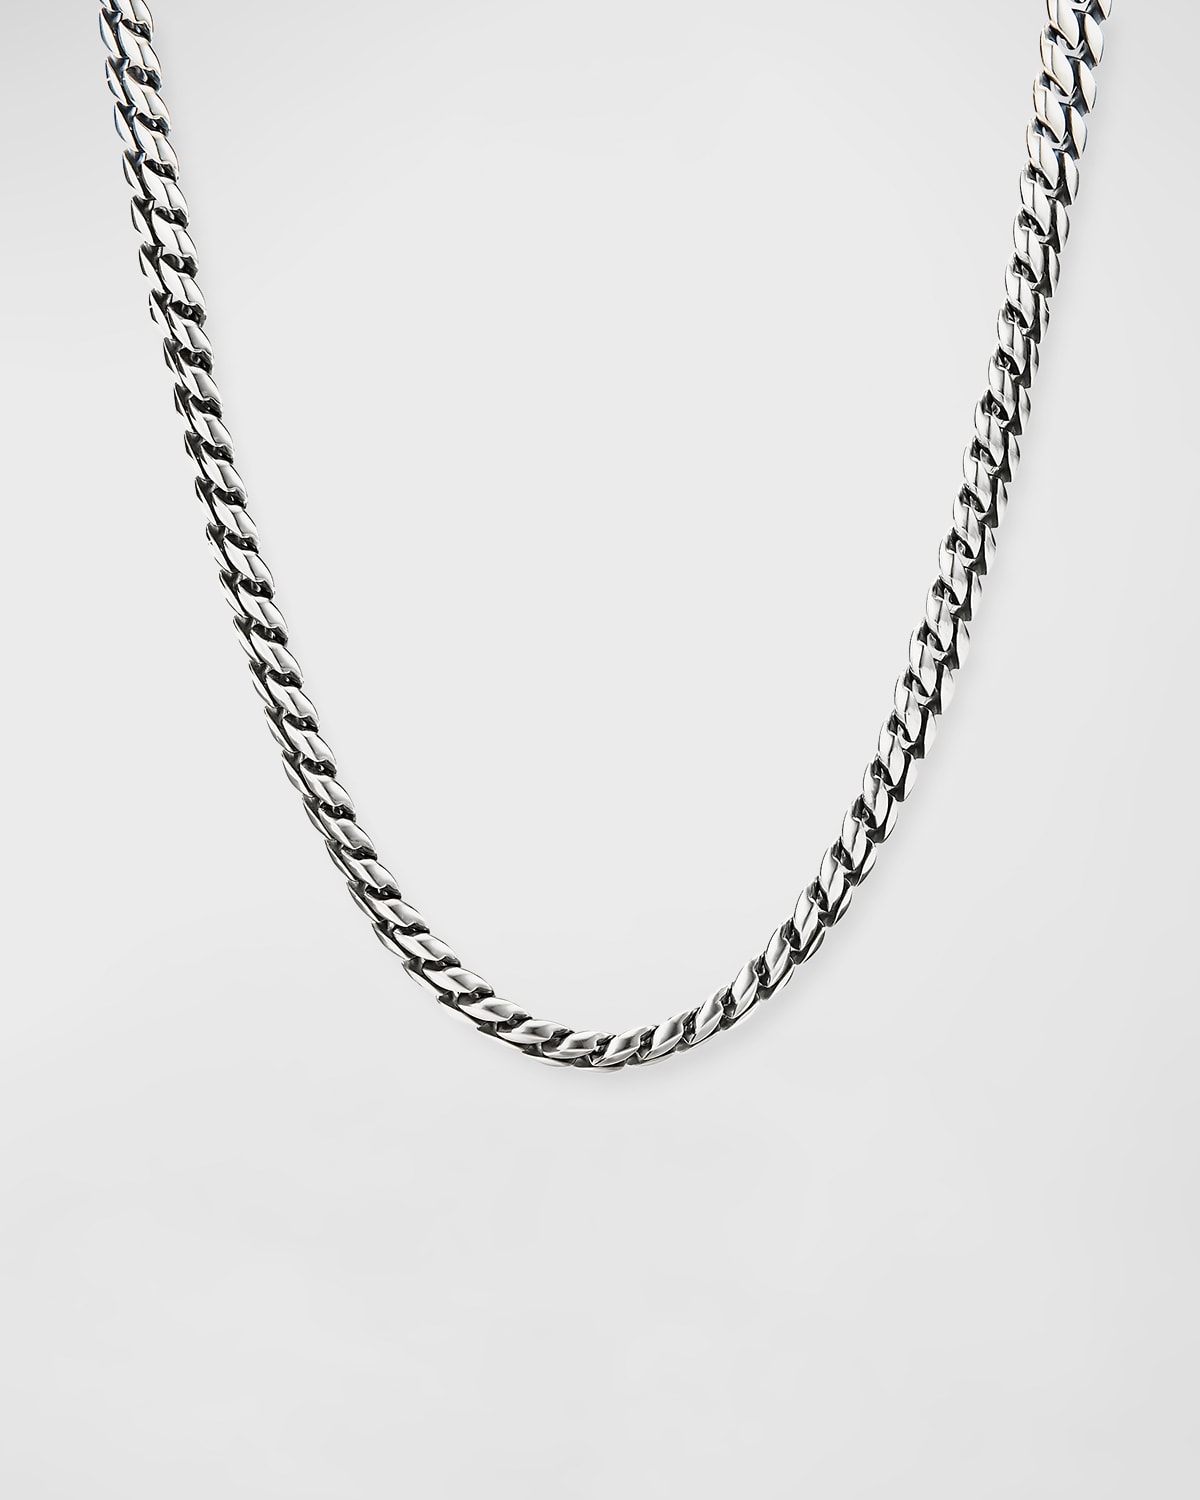 David Yurman Men's Curb Chain Necklace In Silver, 8mm, 24"l